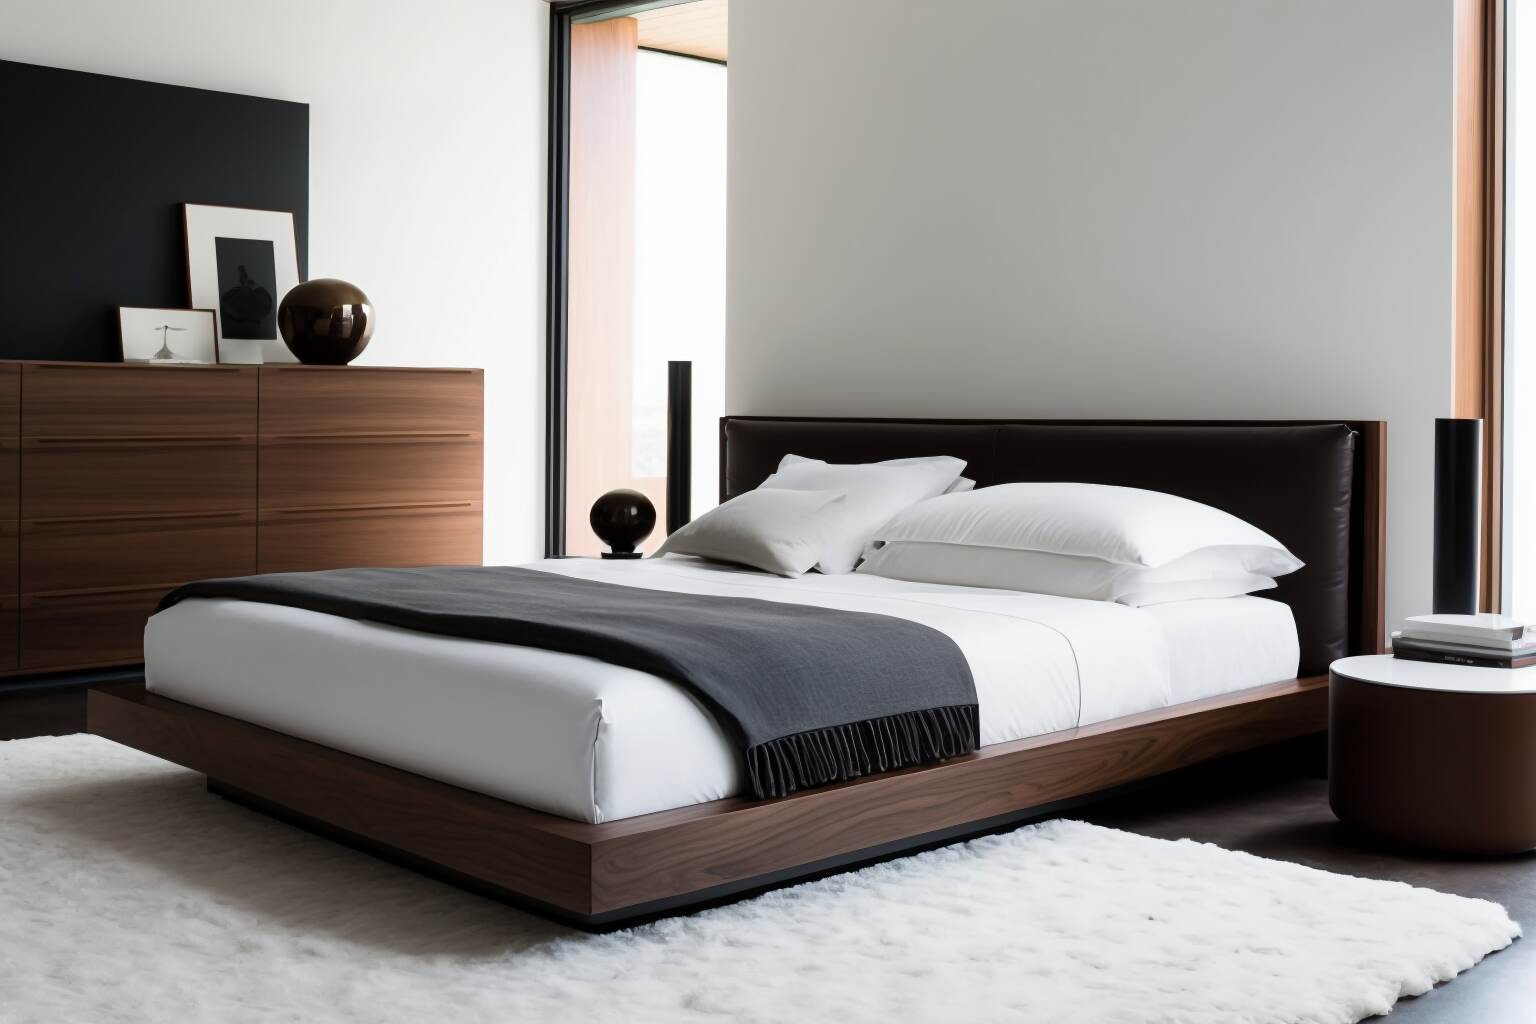 Luxurious Italian Designer Porro Bed In A Rich Wood Finish